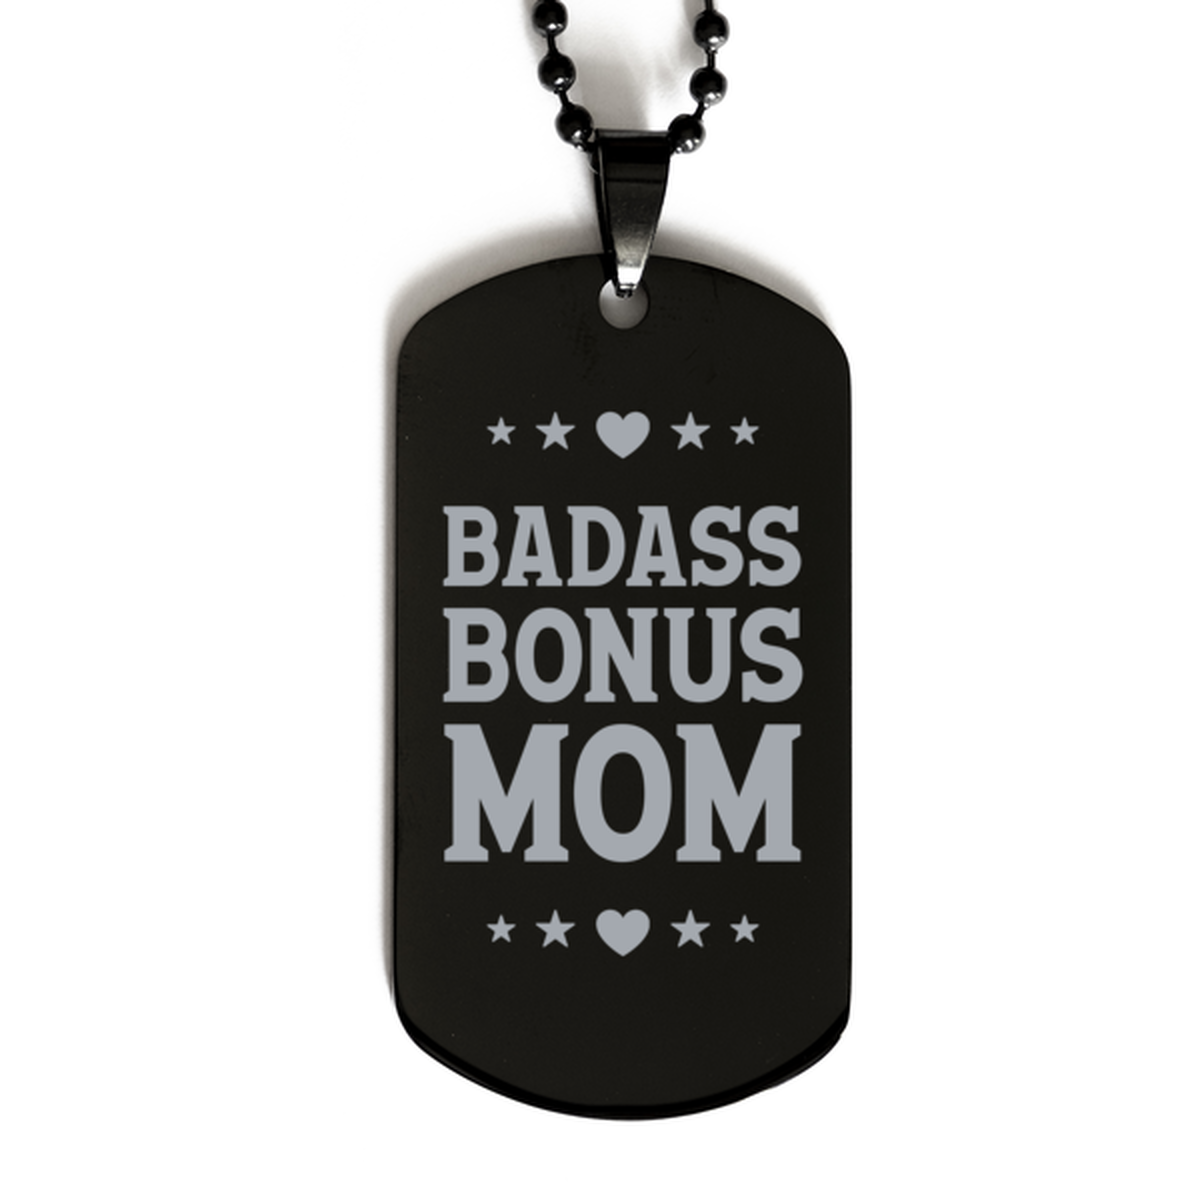 Bonus Mom Black Dog Tag, Badass Bonus Mom, Funny Family Gifts  Necklace For Bonus Mom From Son Daughter